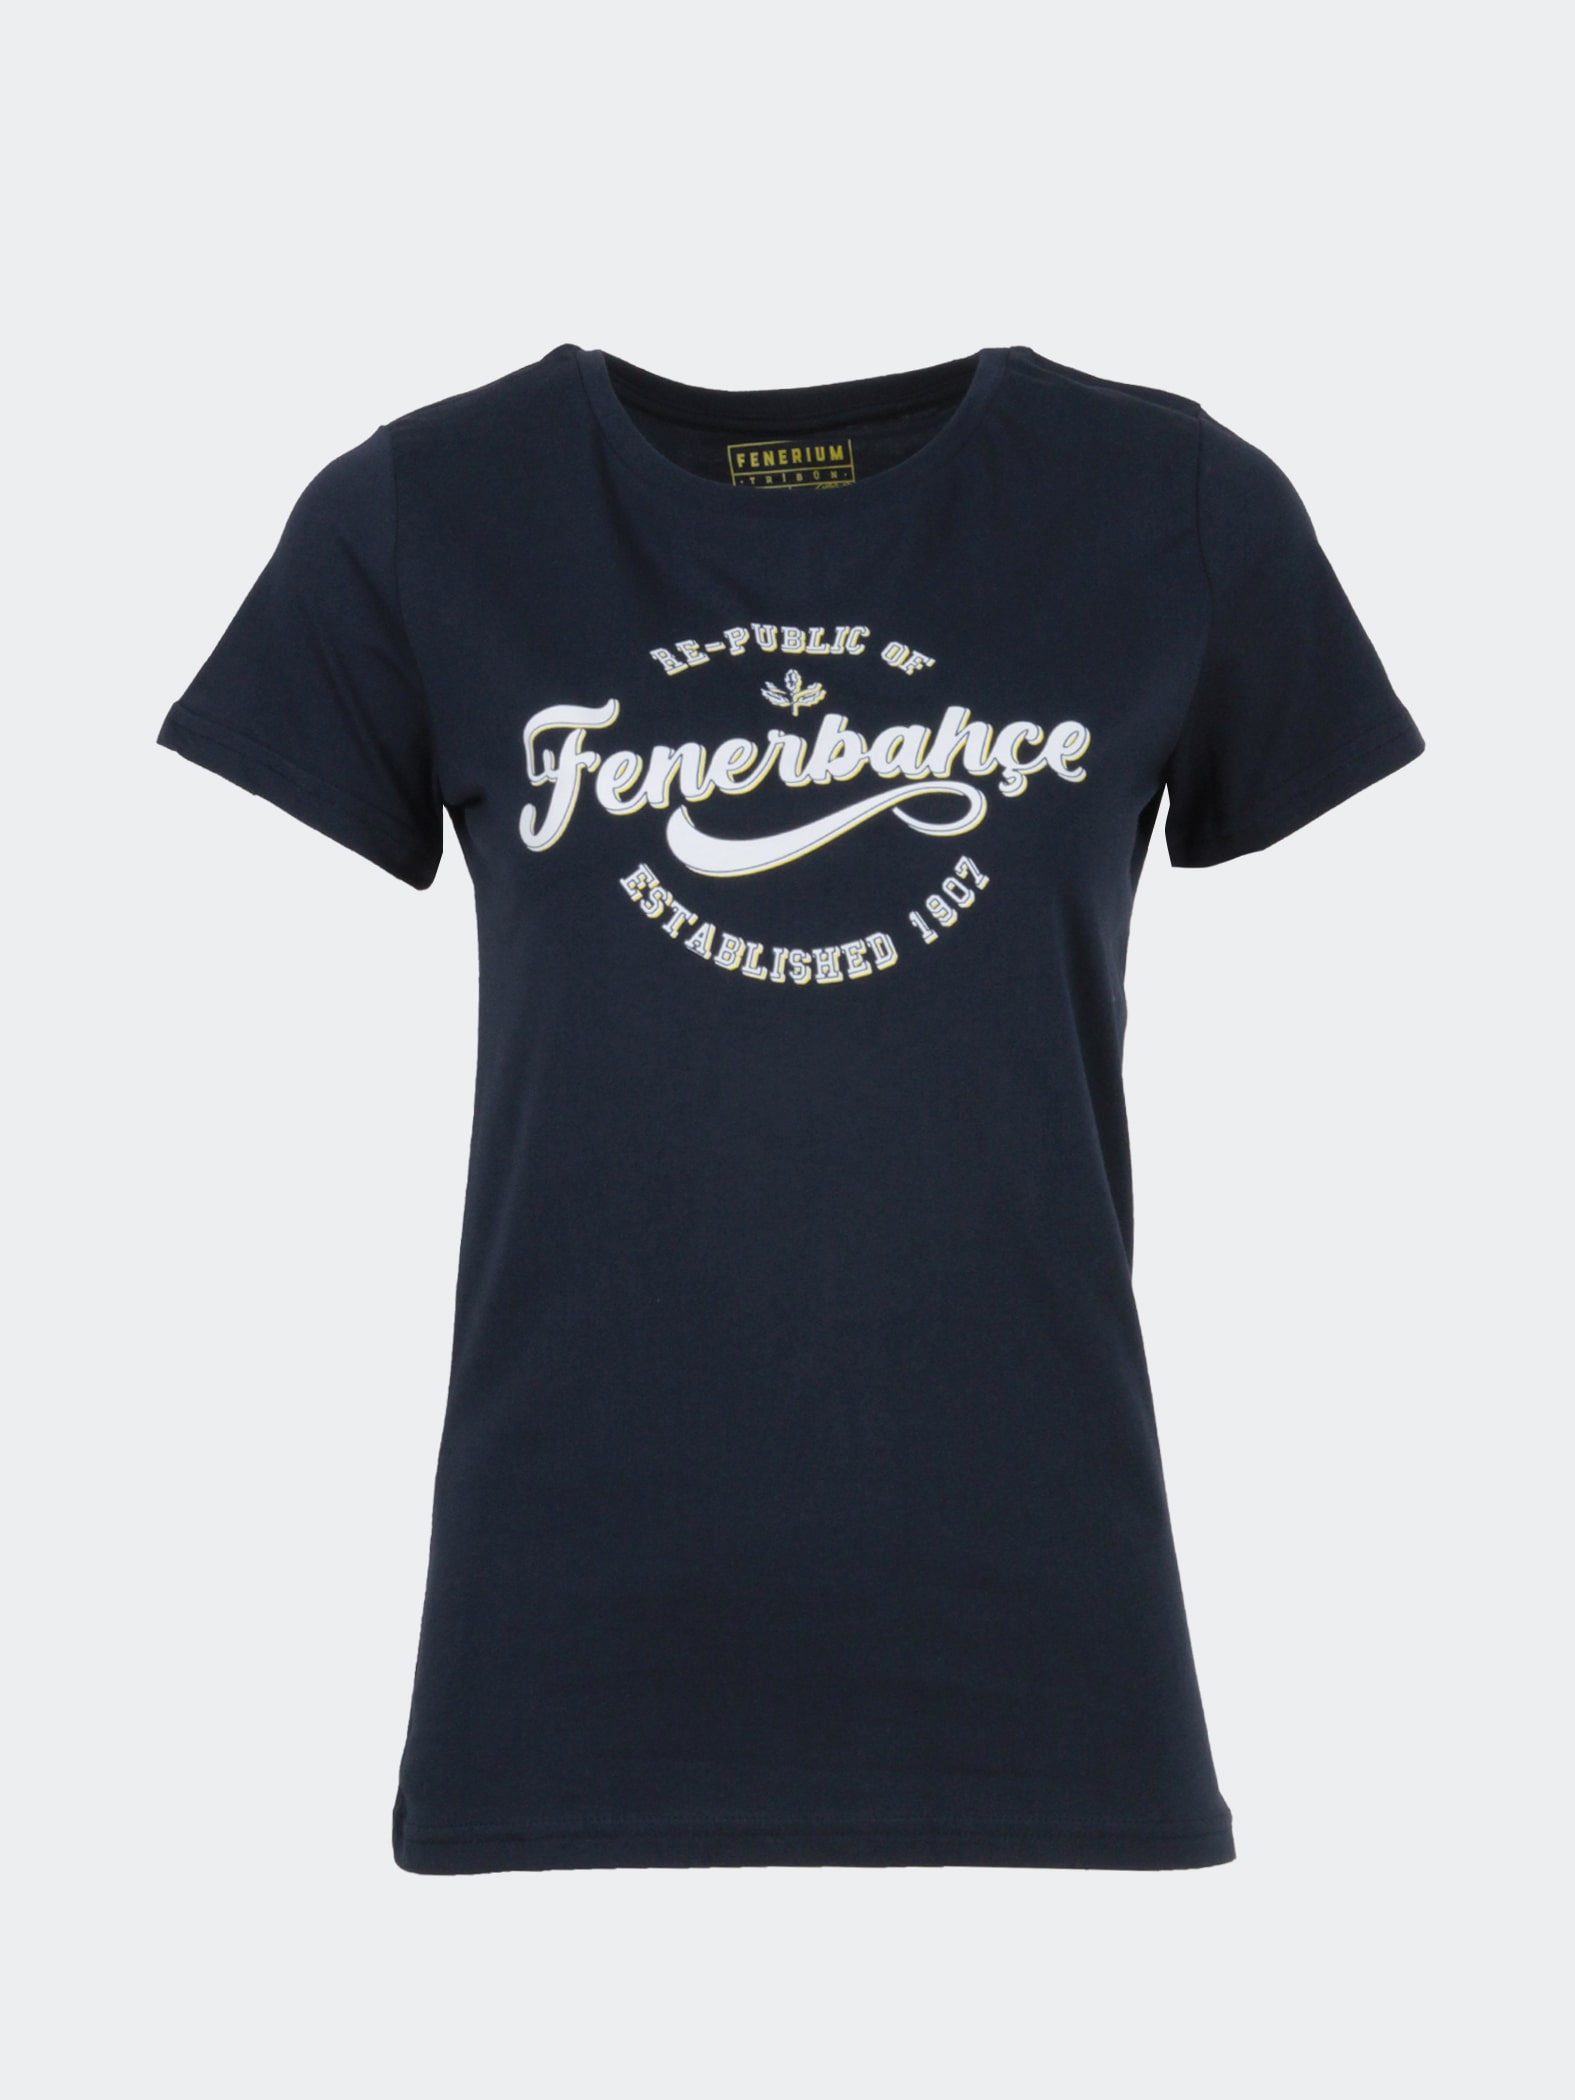 Kadın Lacivert Kolej Fenerbahçe Tshirt